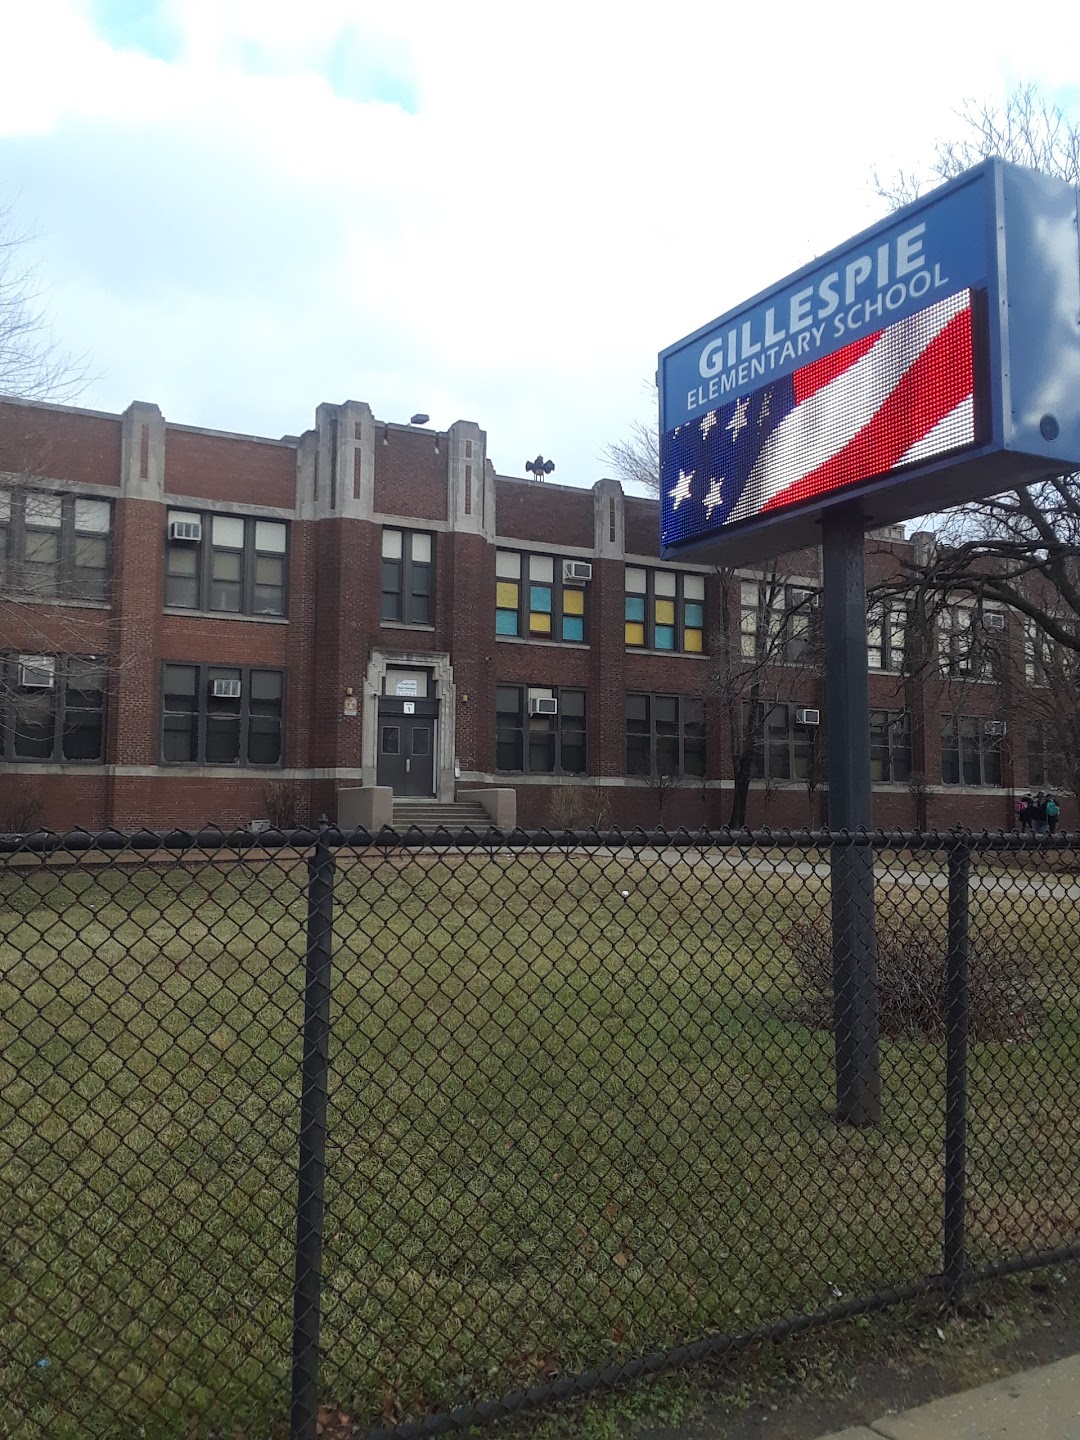 Gillespie Elementary School